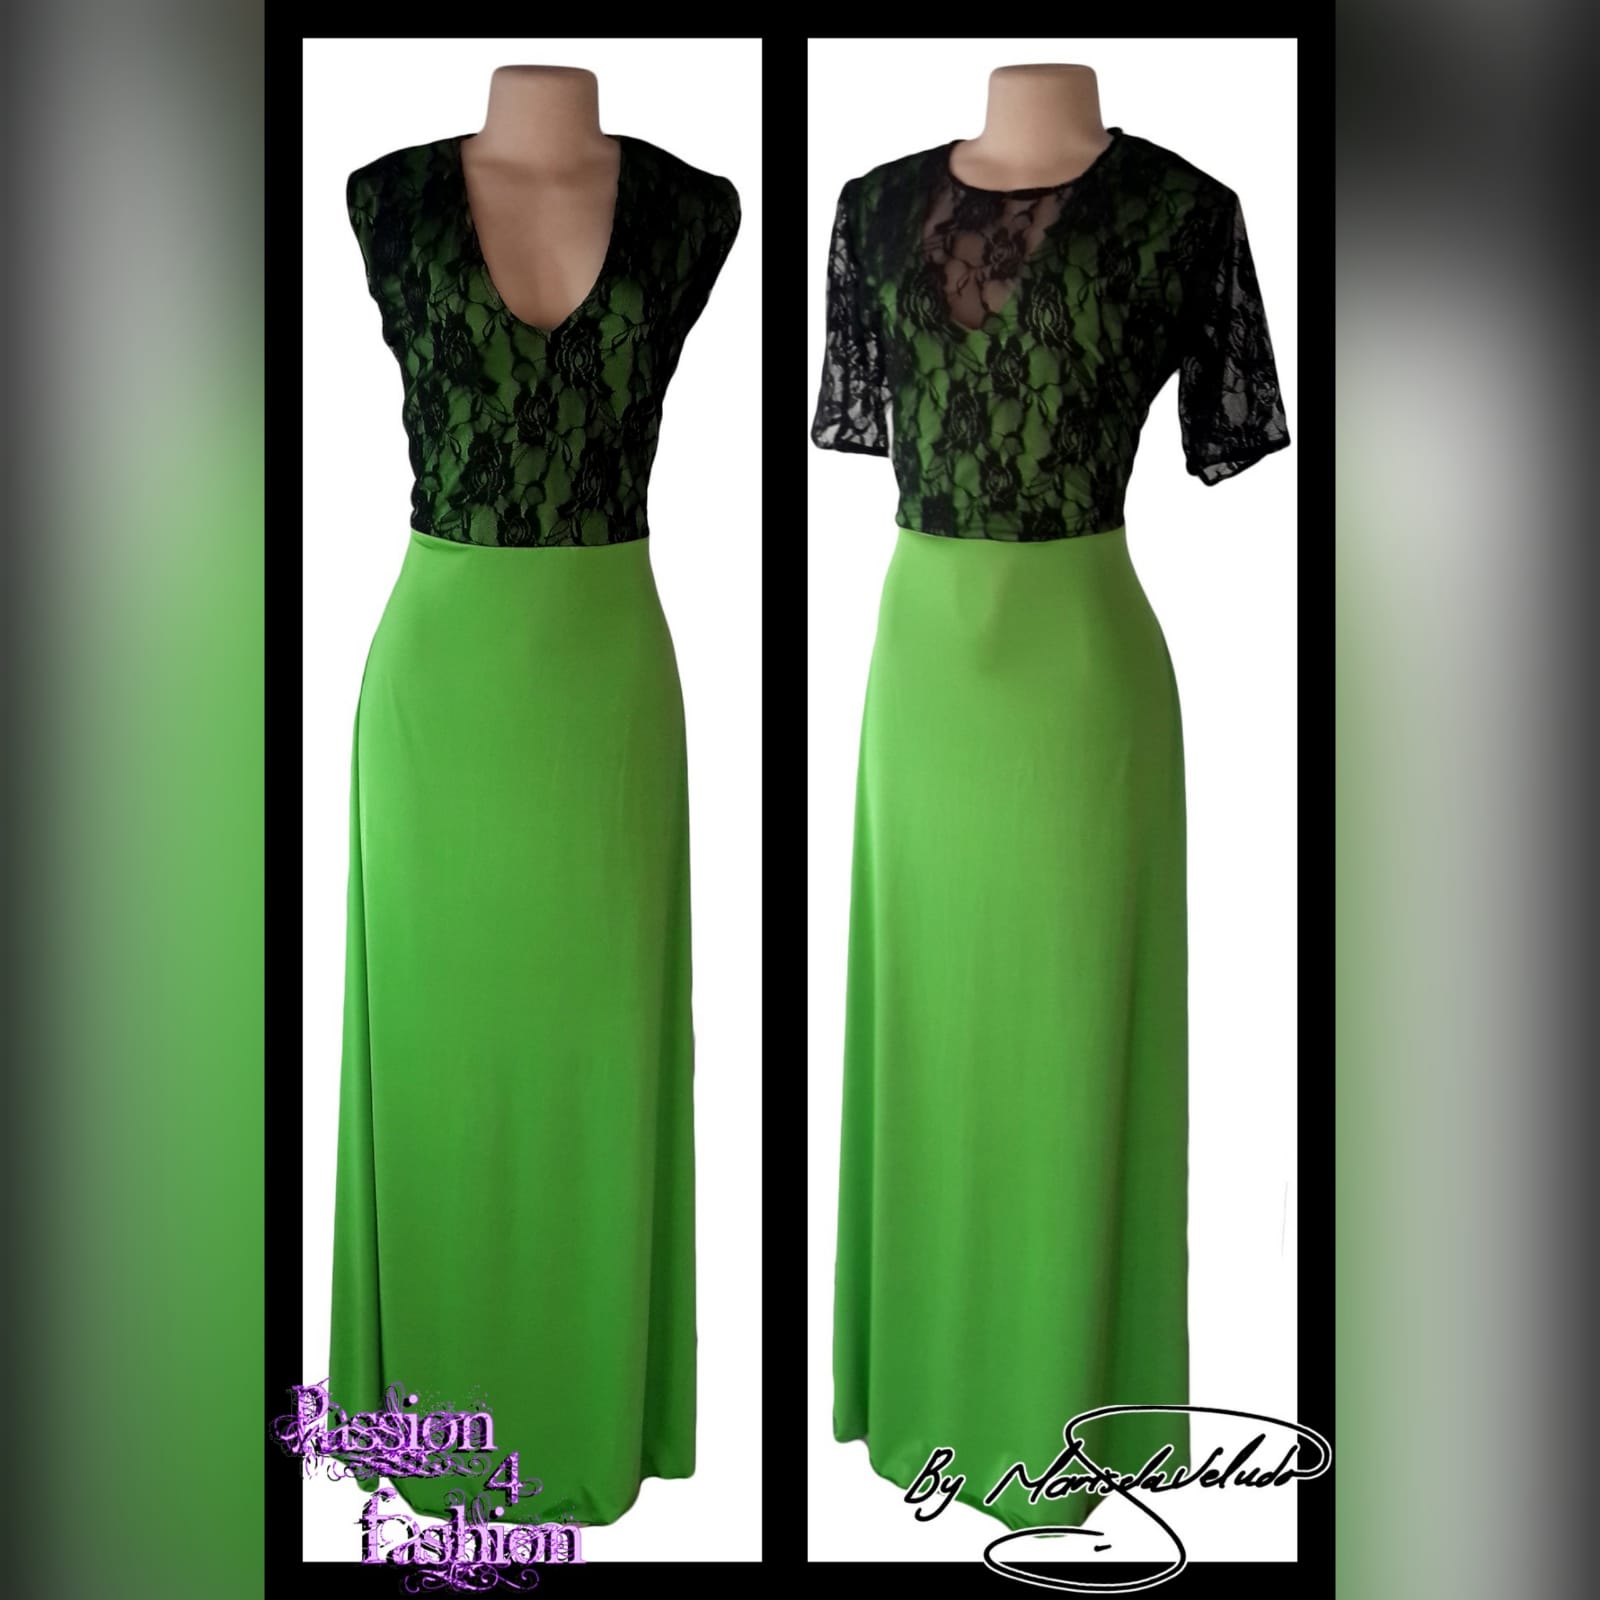 Green and black bridesmaid dresses 3 green & black bridesmaid dresses. Bodice with an overlayer of black lace.